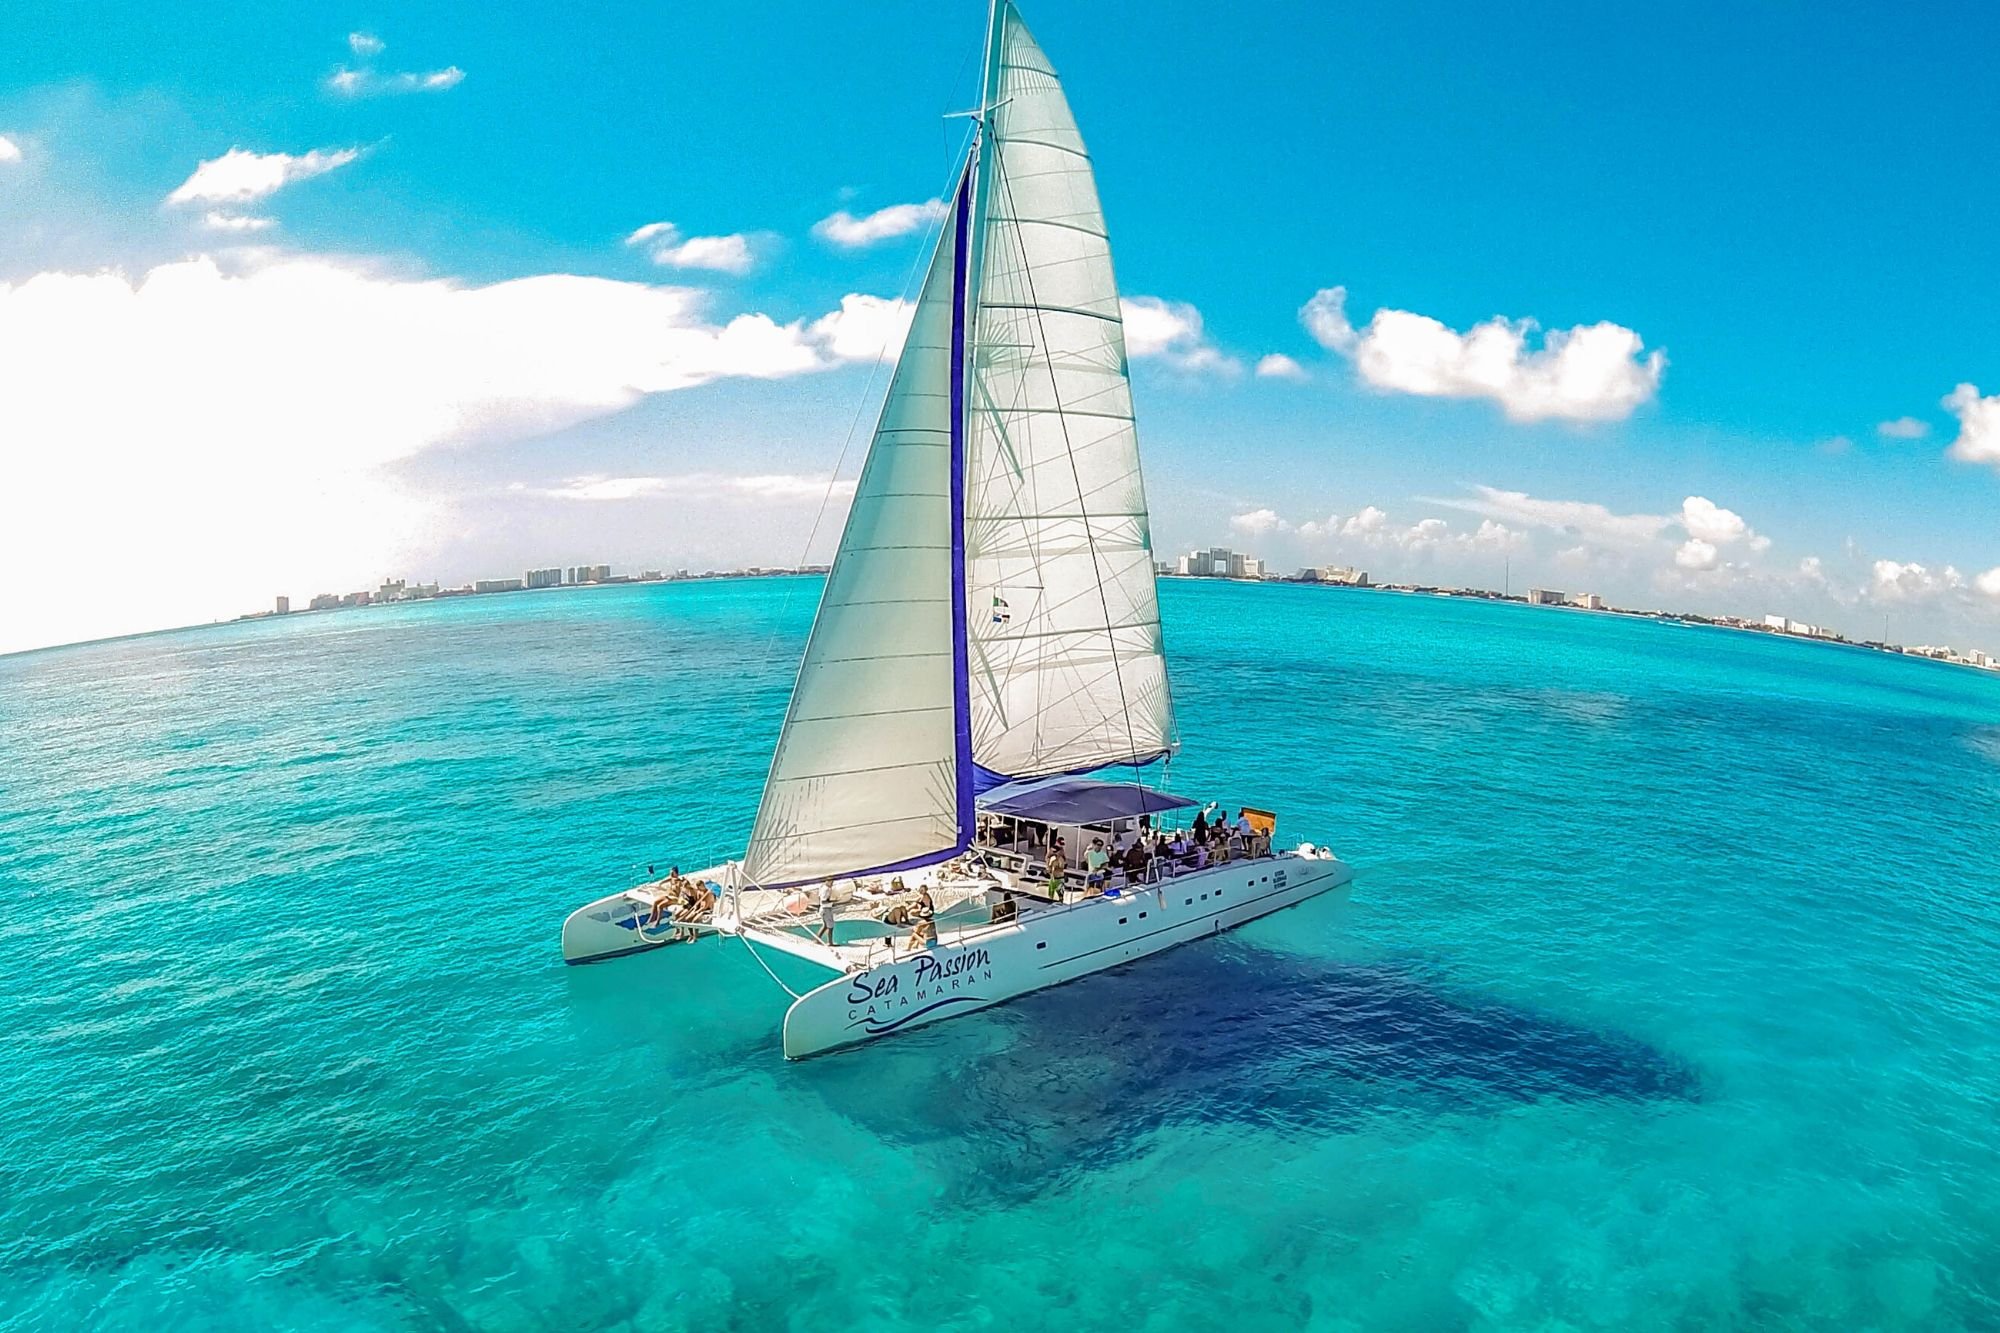 cancun sailing tours